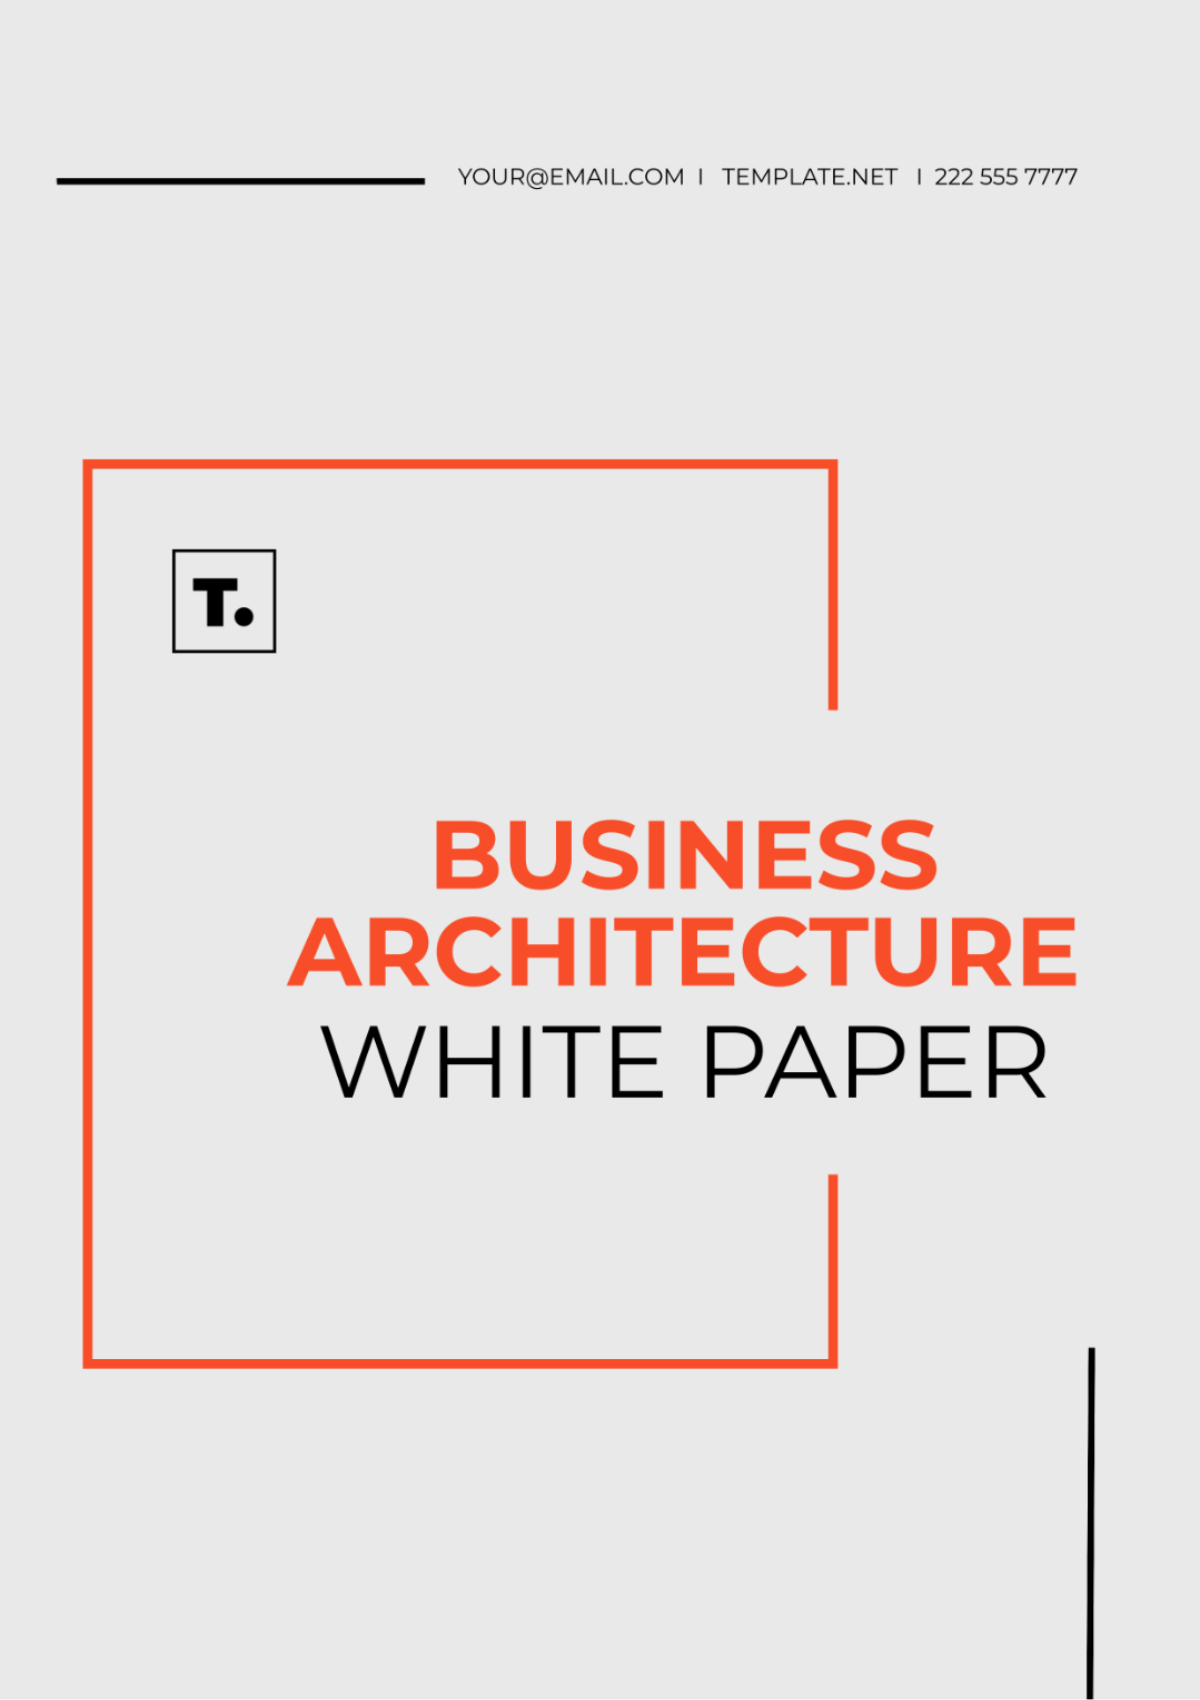 Business Architecture White Paper Template